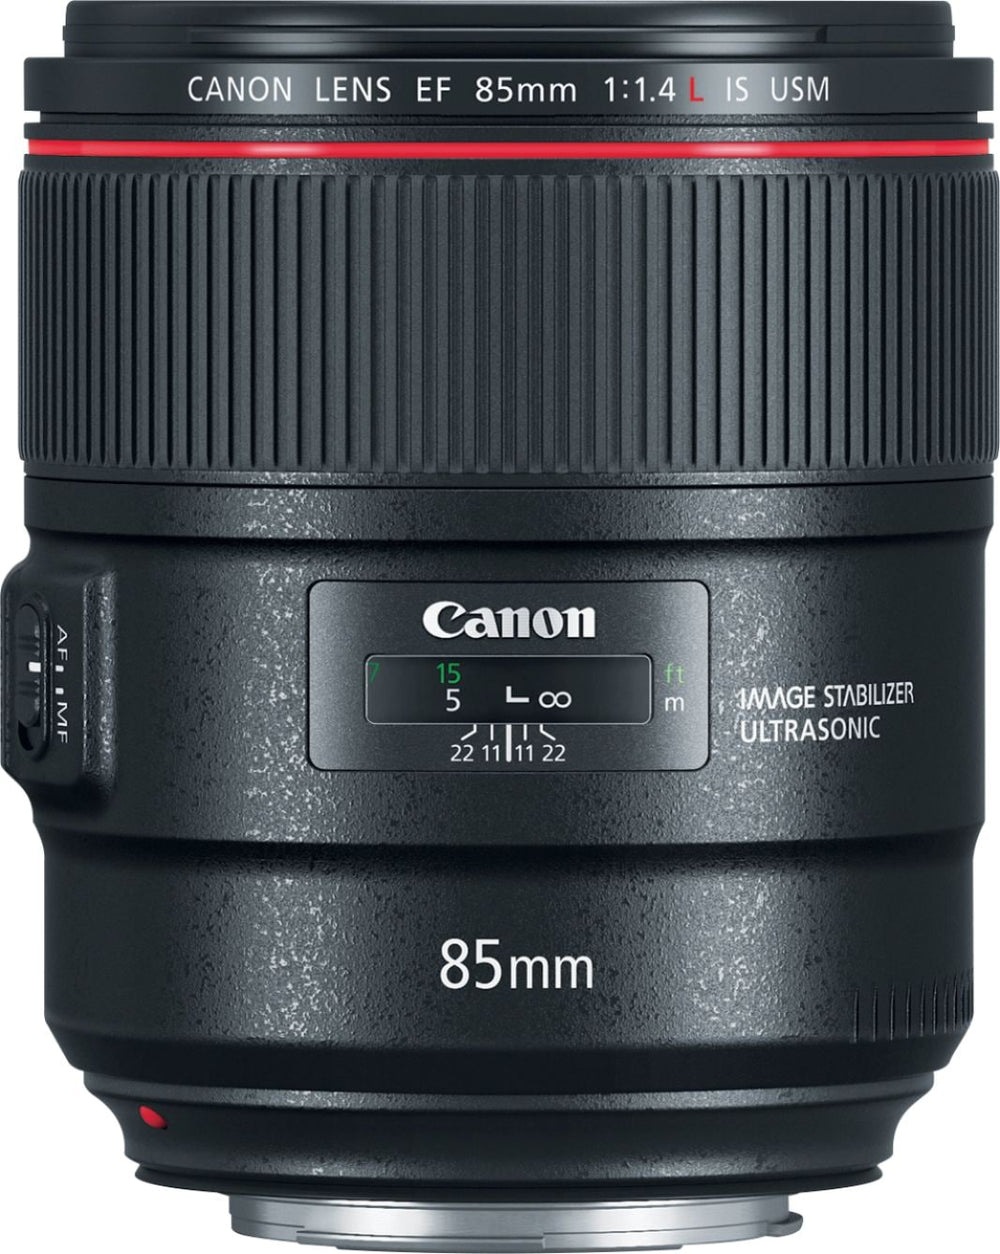 Canon - EF 85mm f/1.4L IS USM Telephoto Lens for DSLRs - Black_1